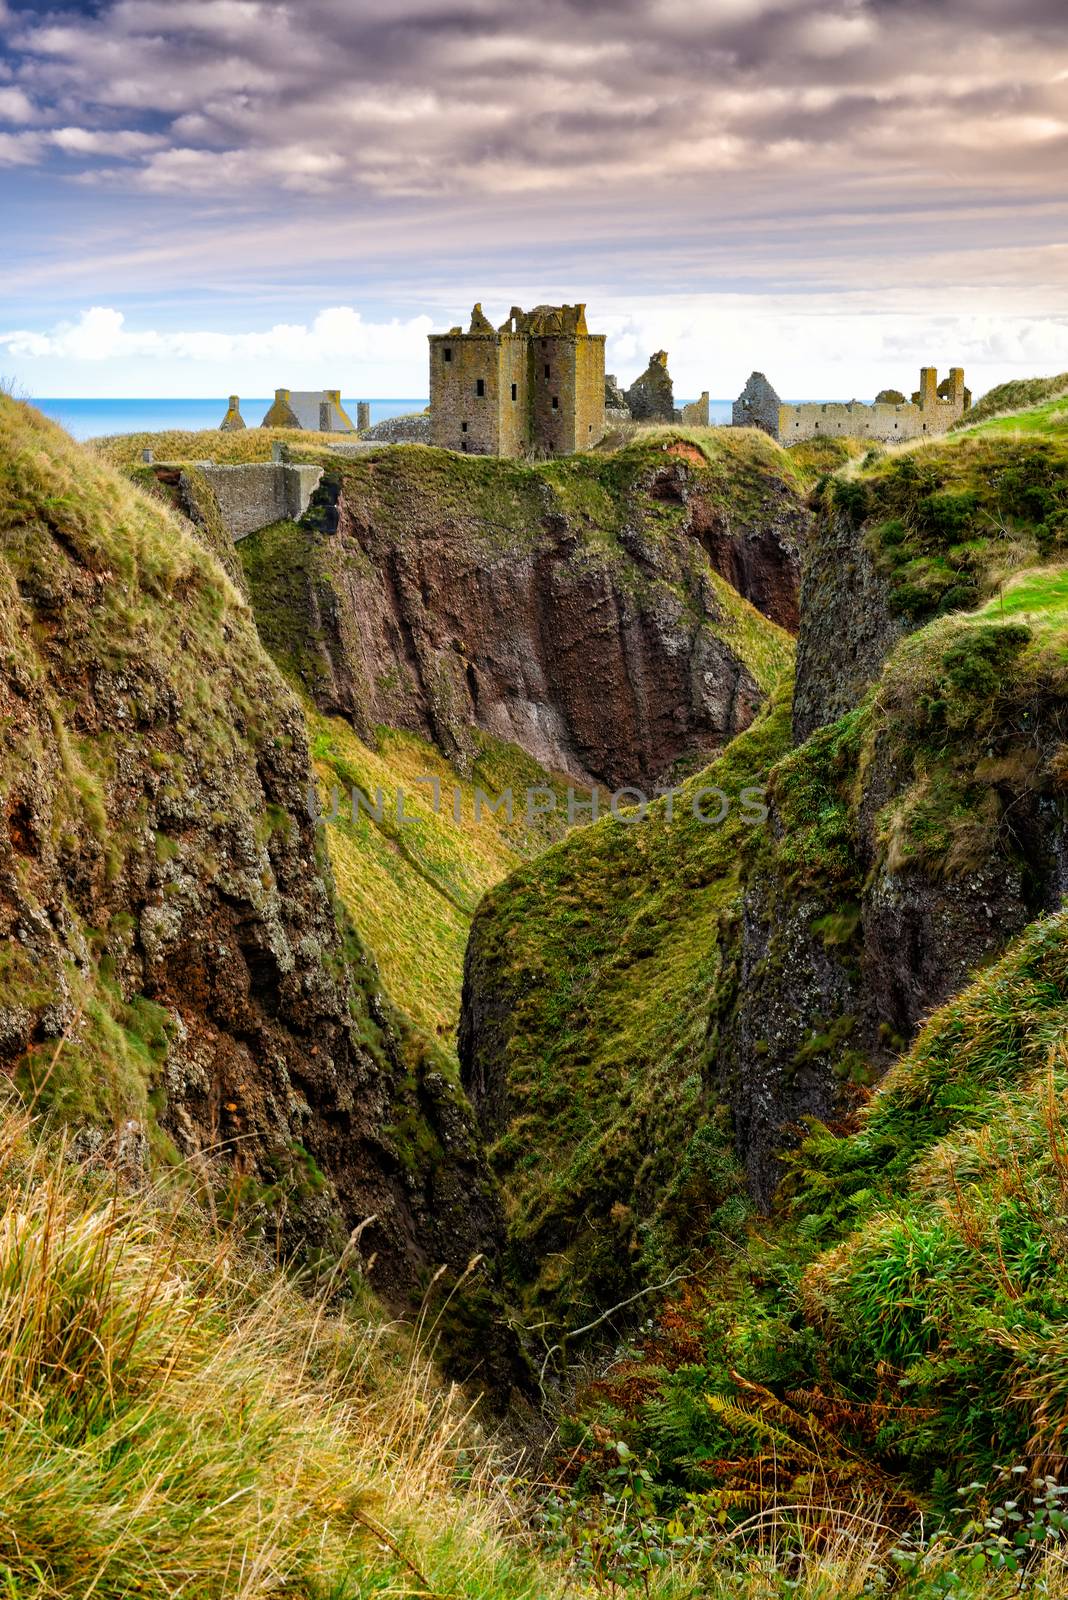 Dunnottar Castle near Stonehaven in Aberdeenshire, Scotland.